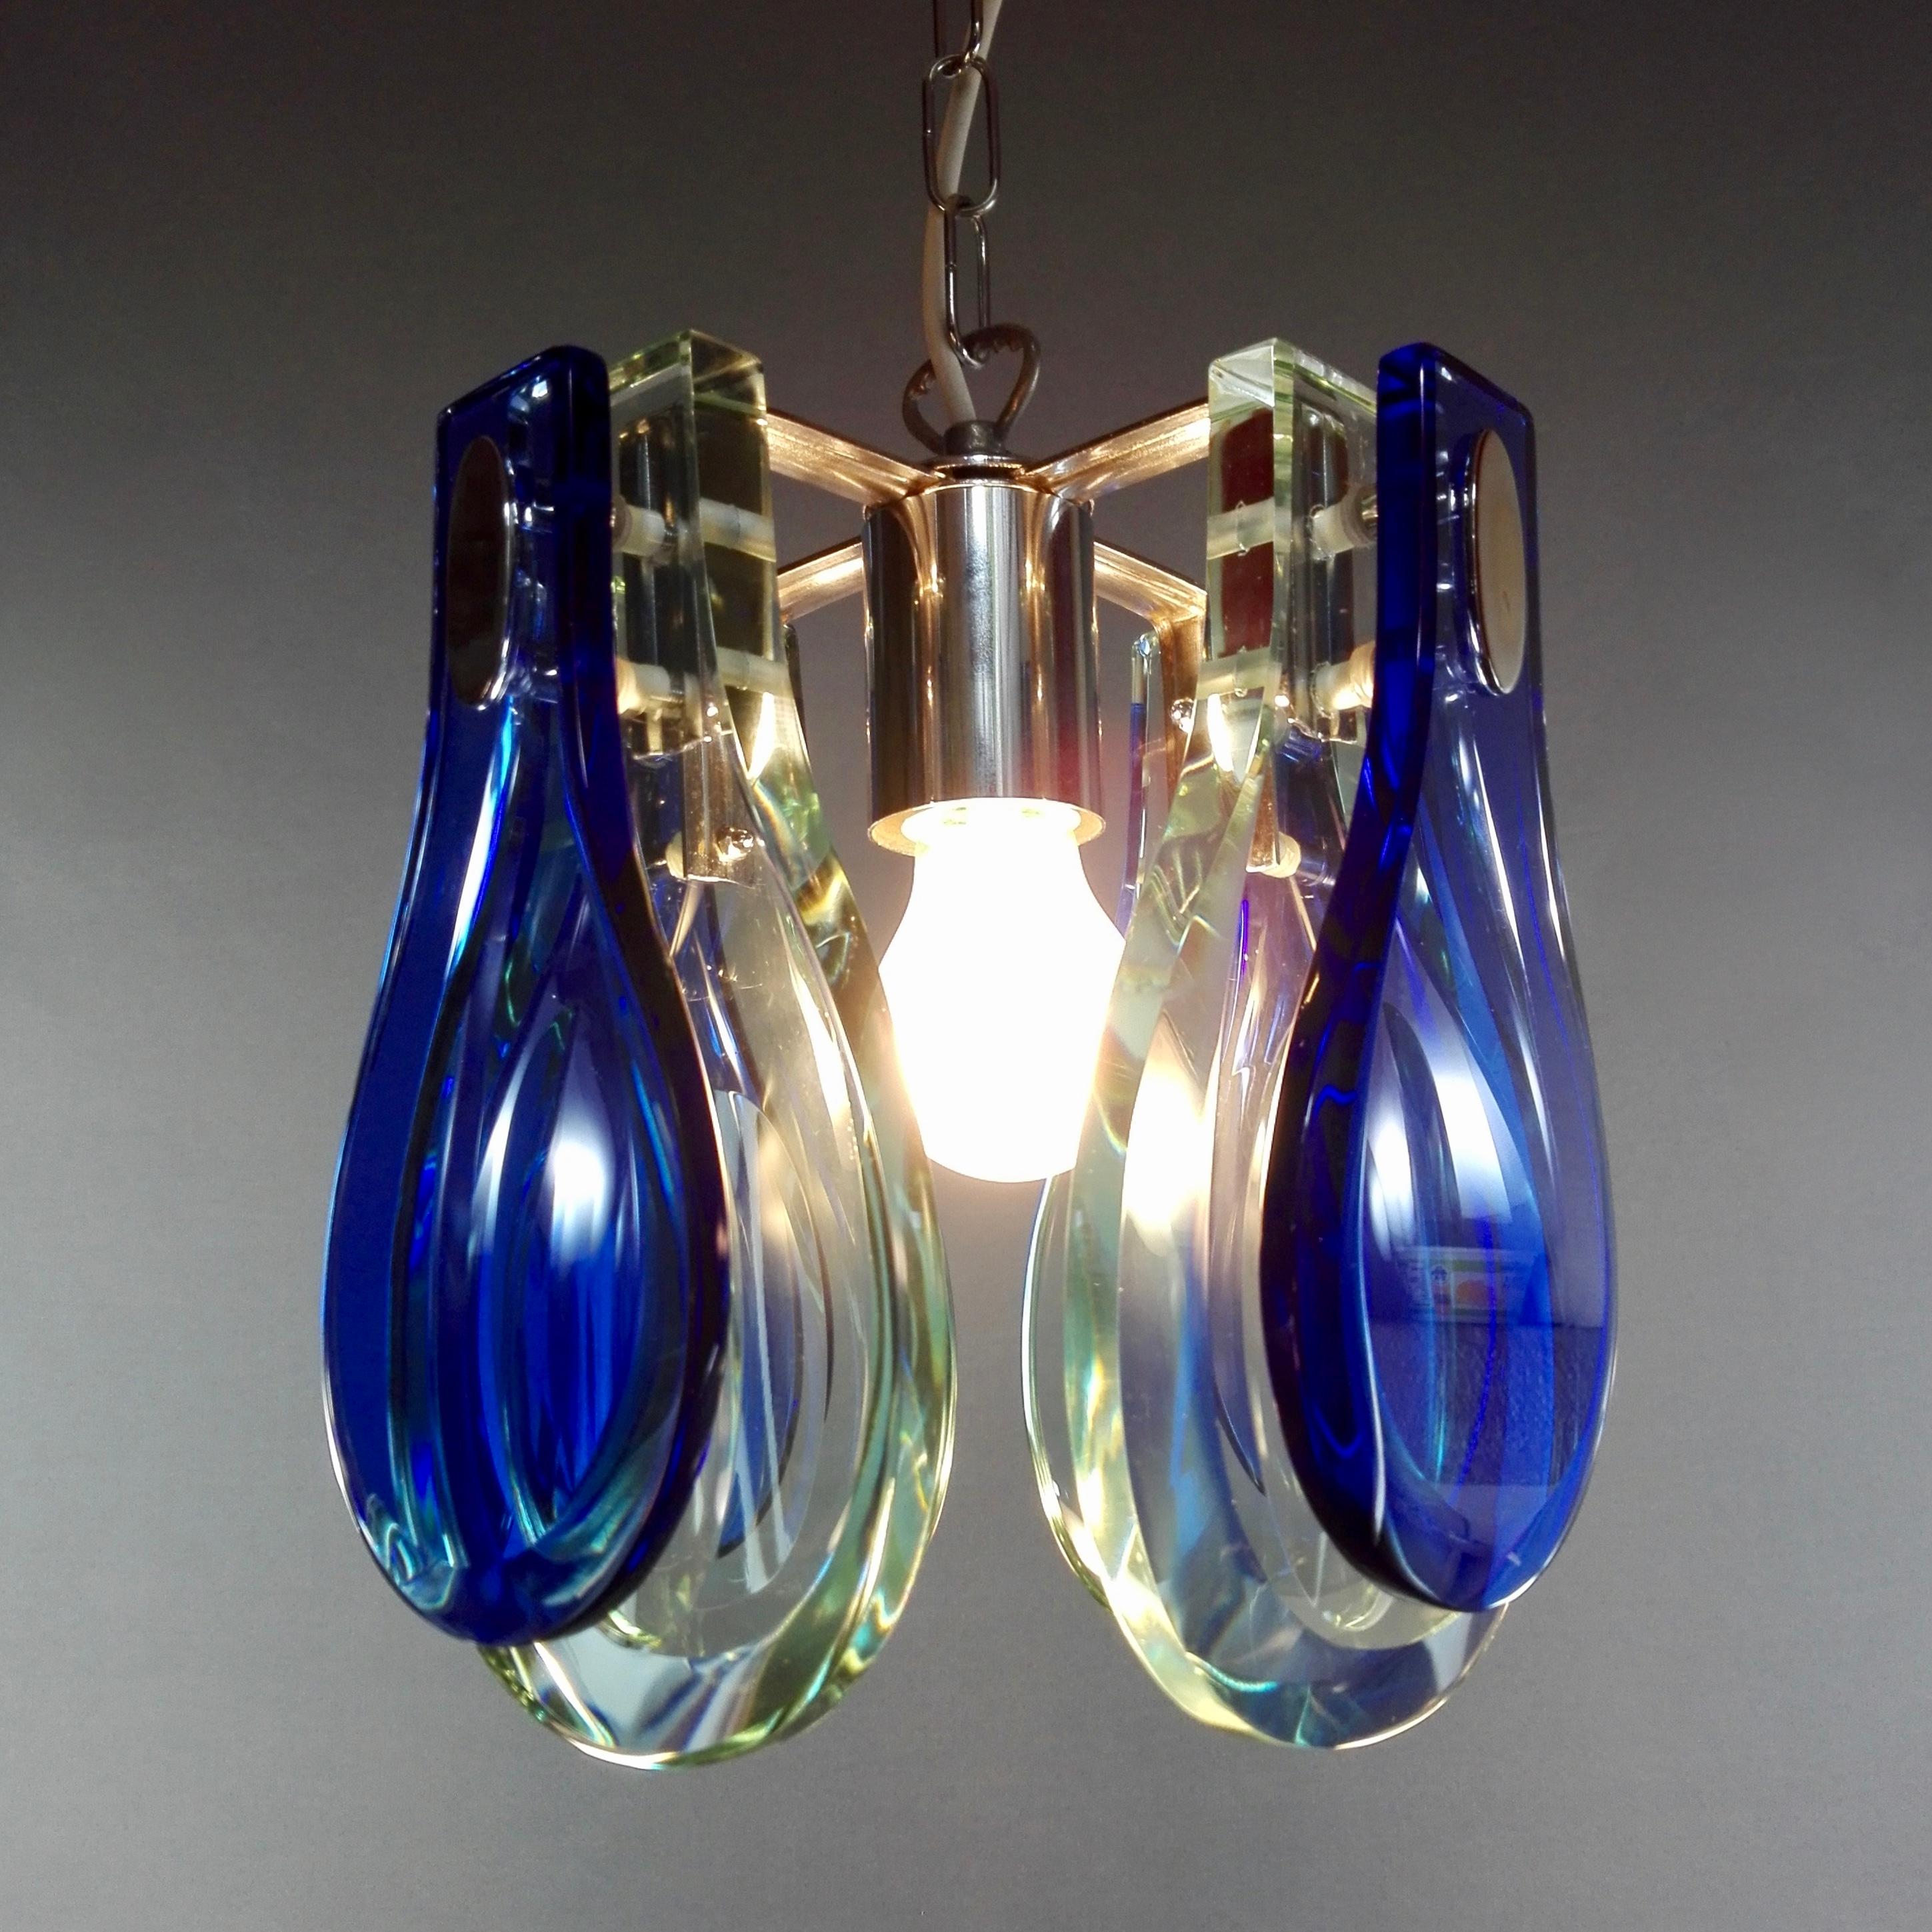 Beveled 1960s Vintage Veca One-Light Ultramarine Blue and Teal Glass Pendant Lamp